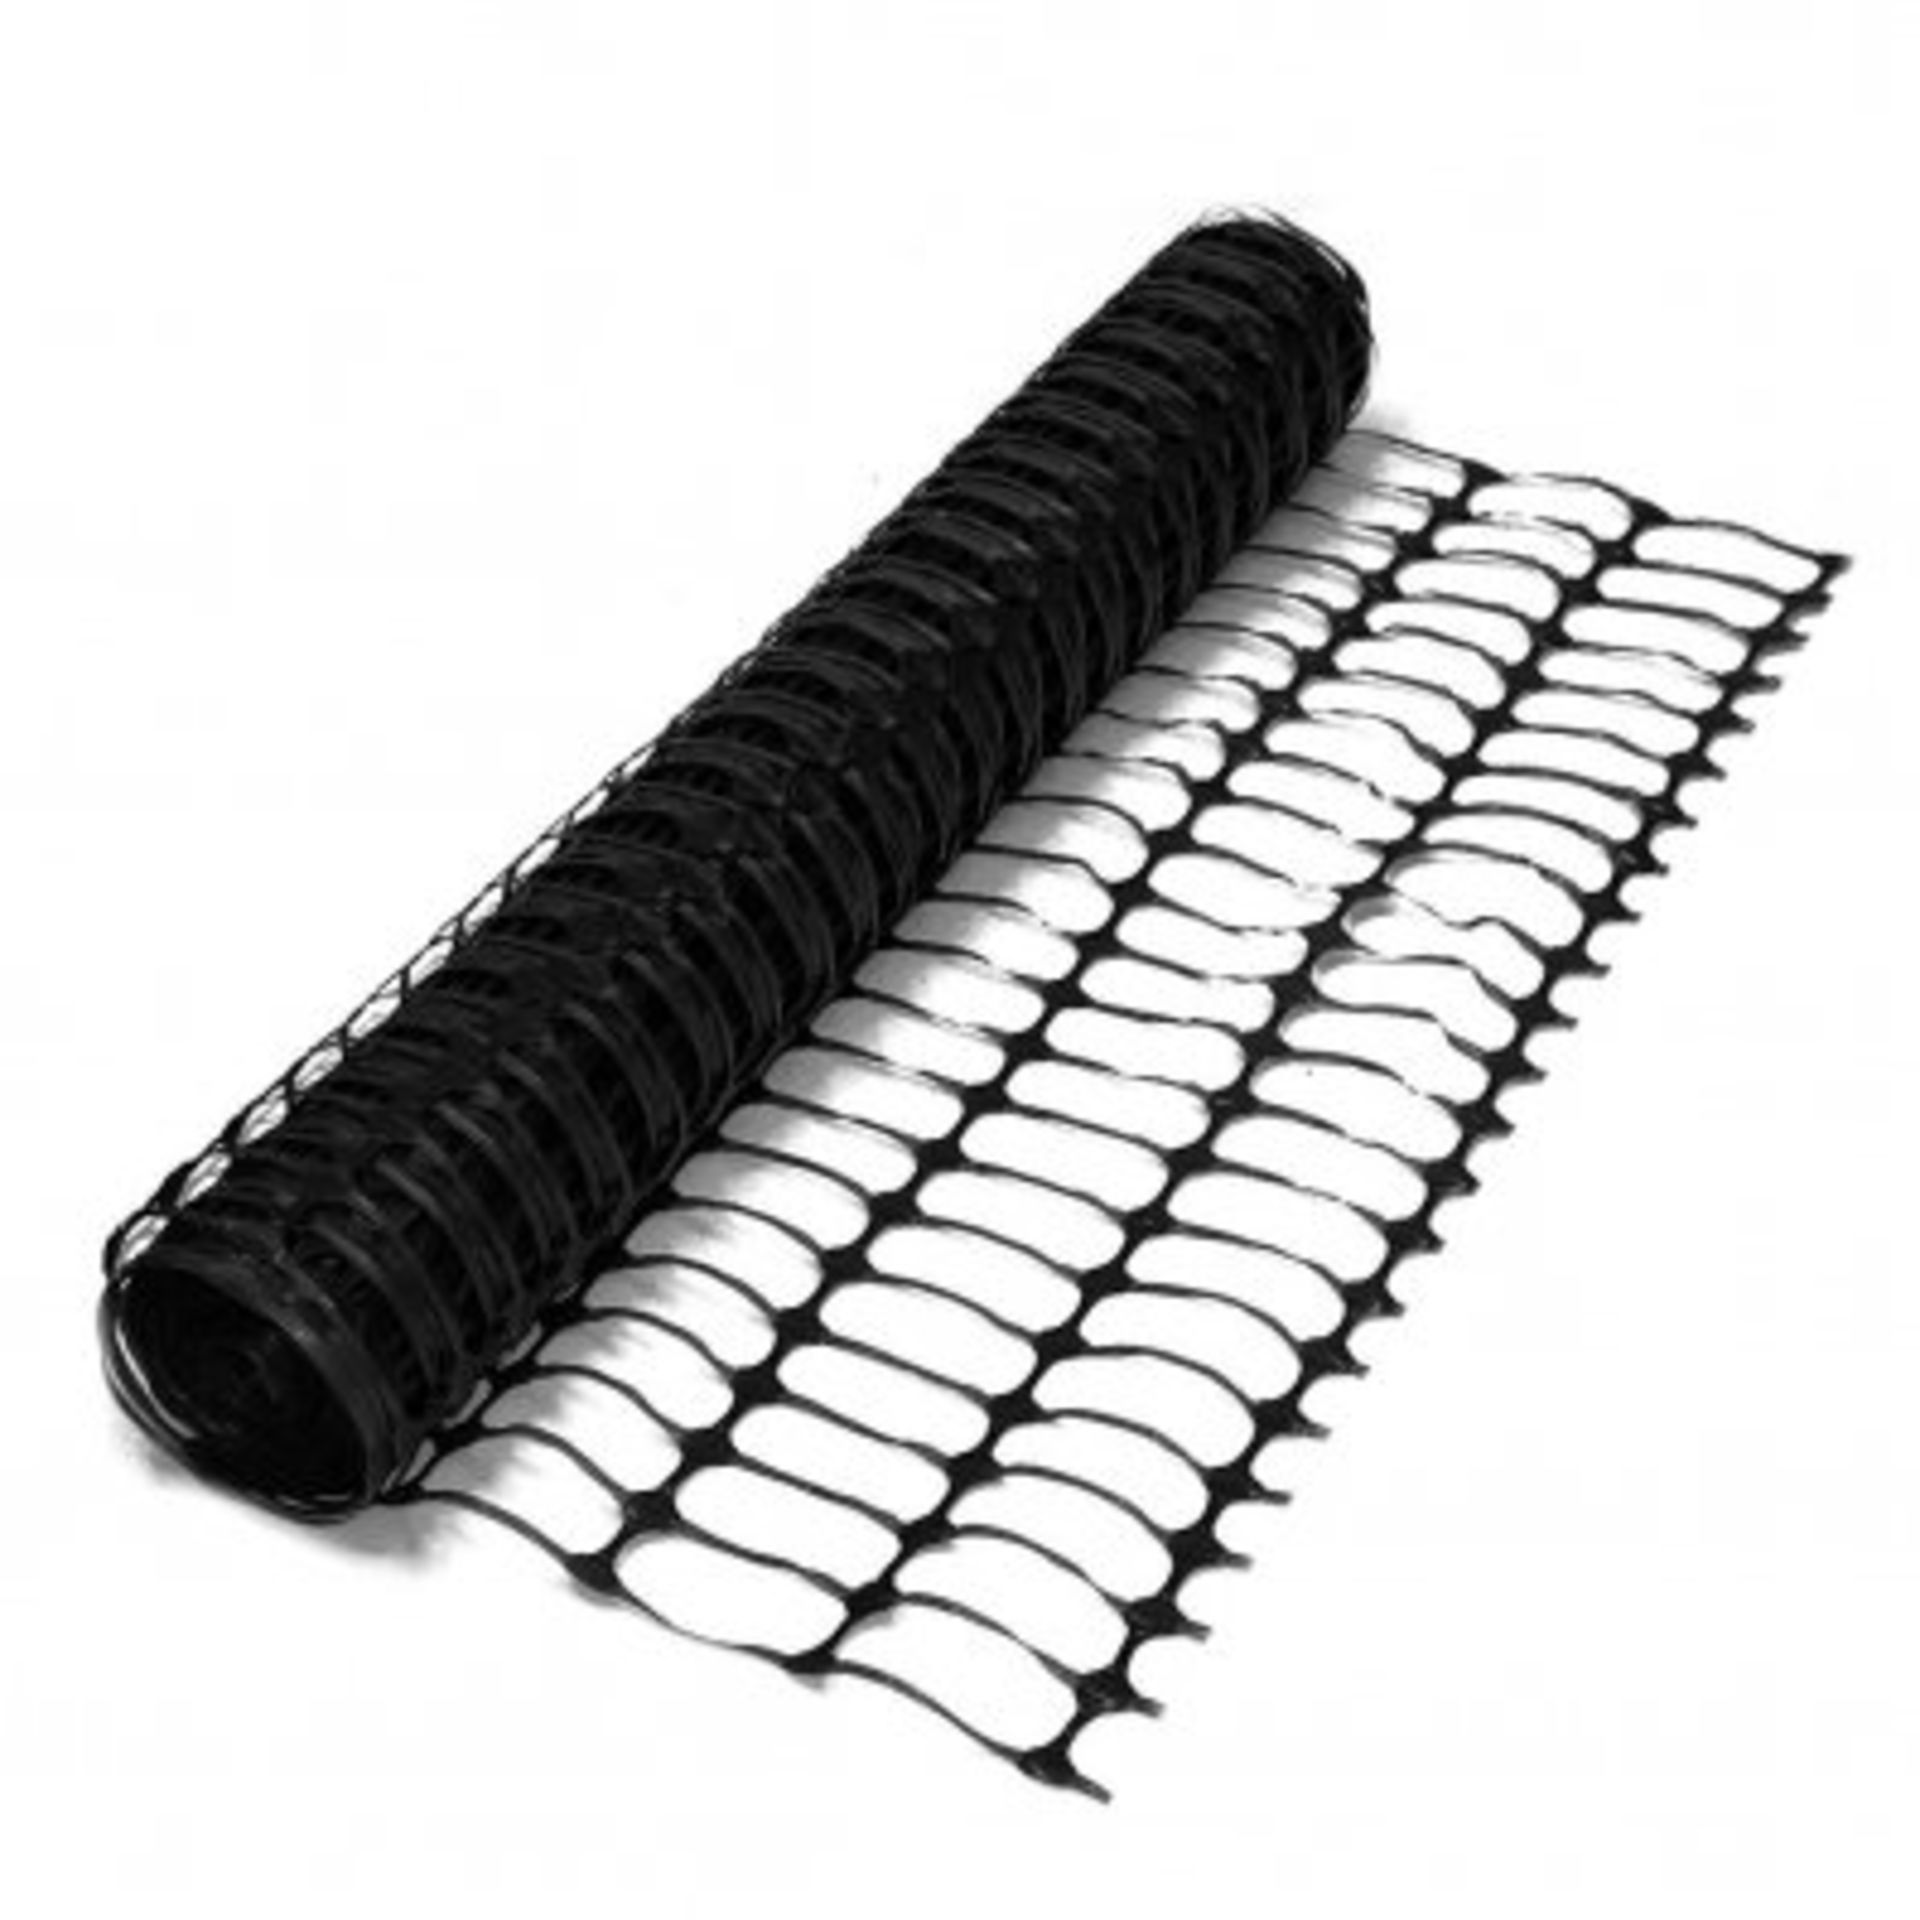 (RL24) 1 x Heavy Duty Black Safety Barrier Mesh Fencing 1mtr x 25mtr One roll of heavy d...